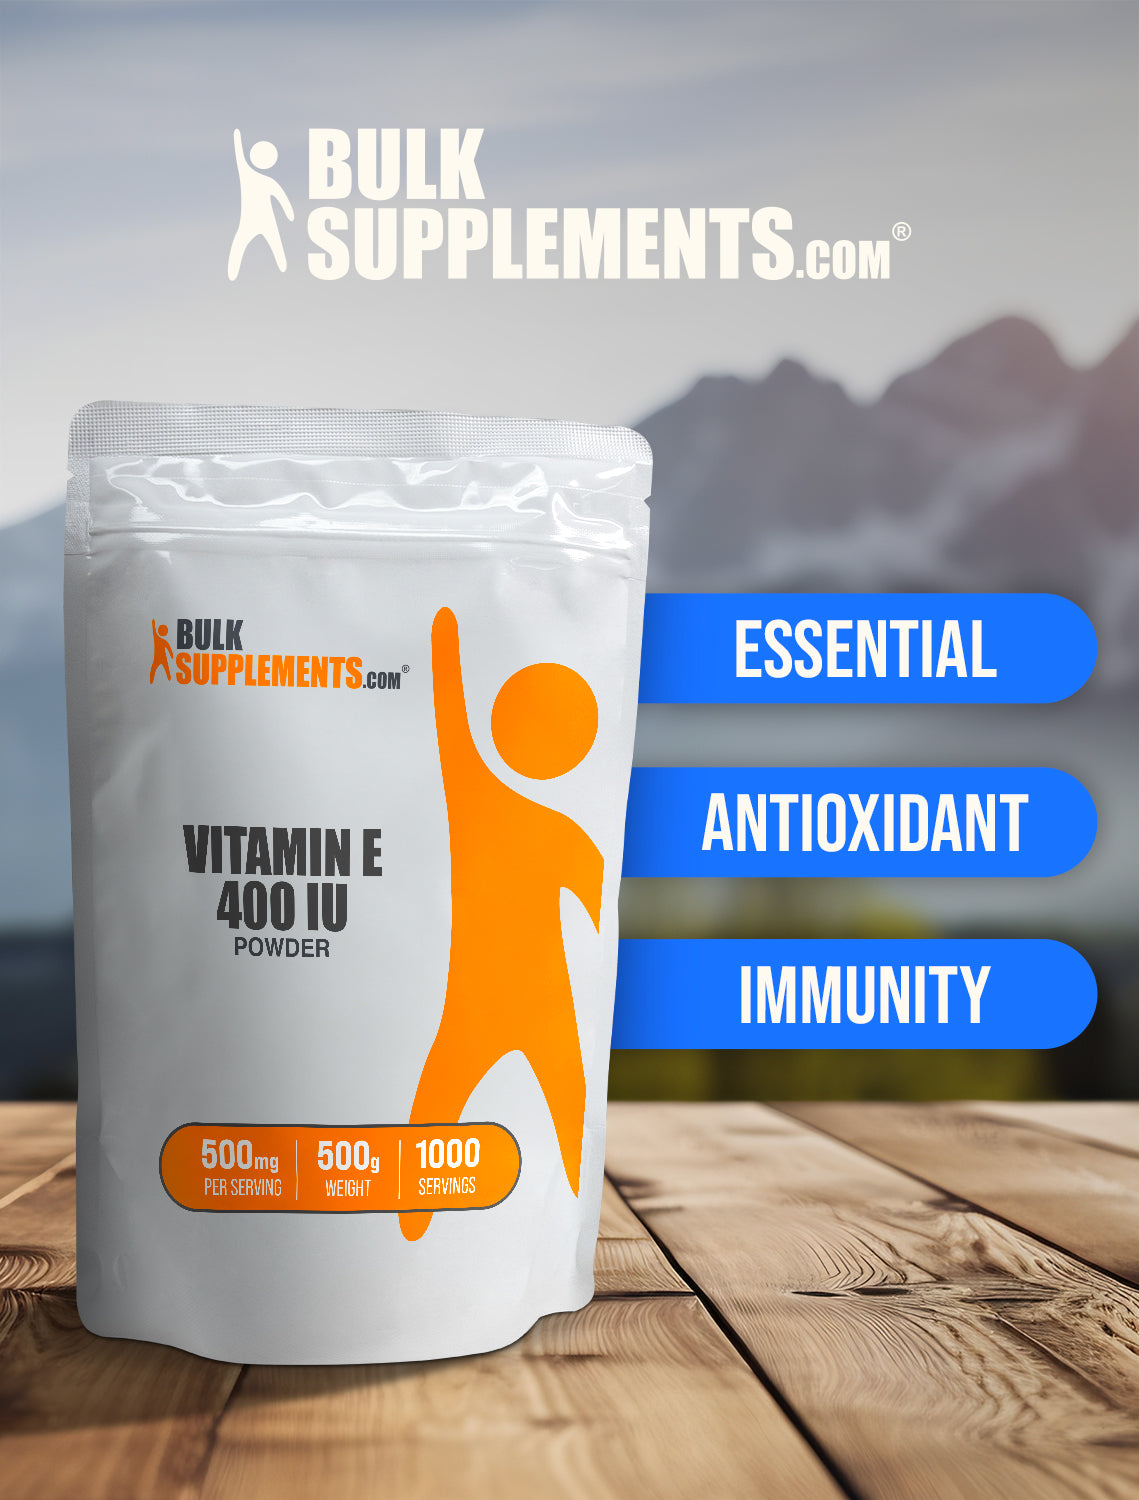 Vitamin E powder keyword image 500g